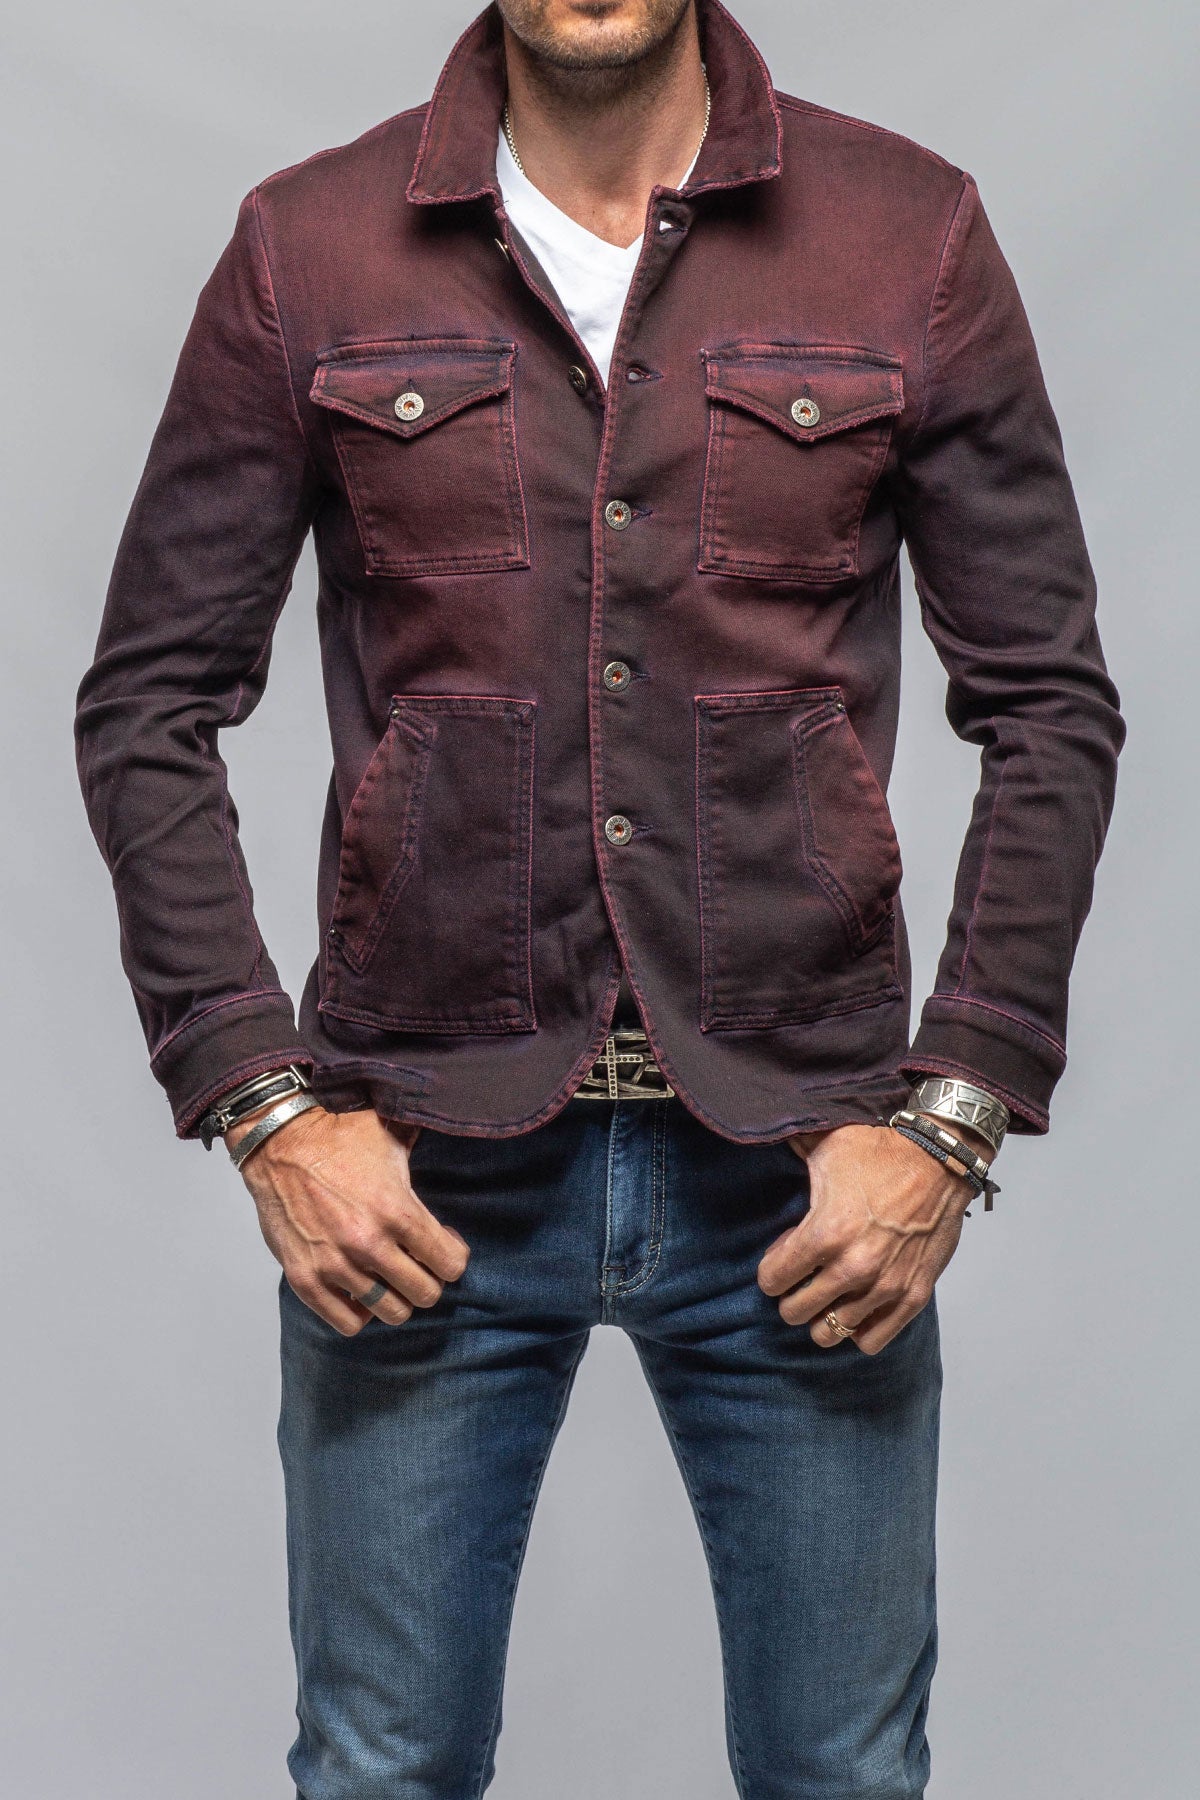 Chase Jacket In Bordeaux Overdye | Mens - Outerwear - Overshirts | Teleria Zed